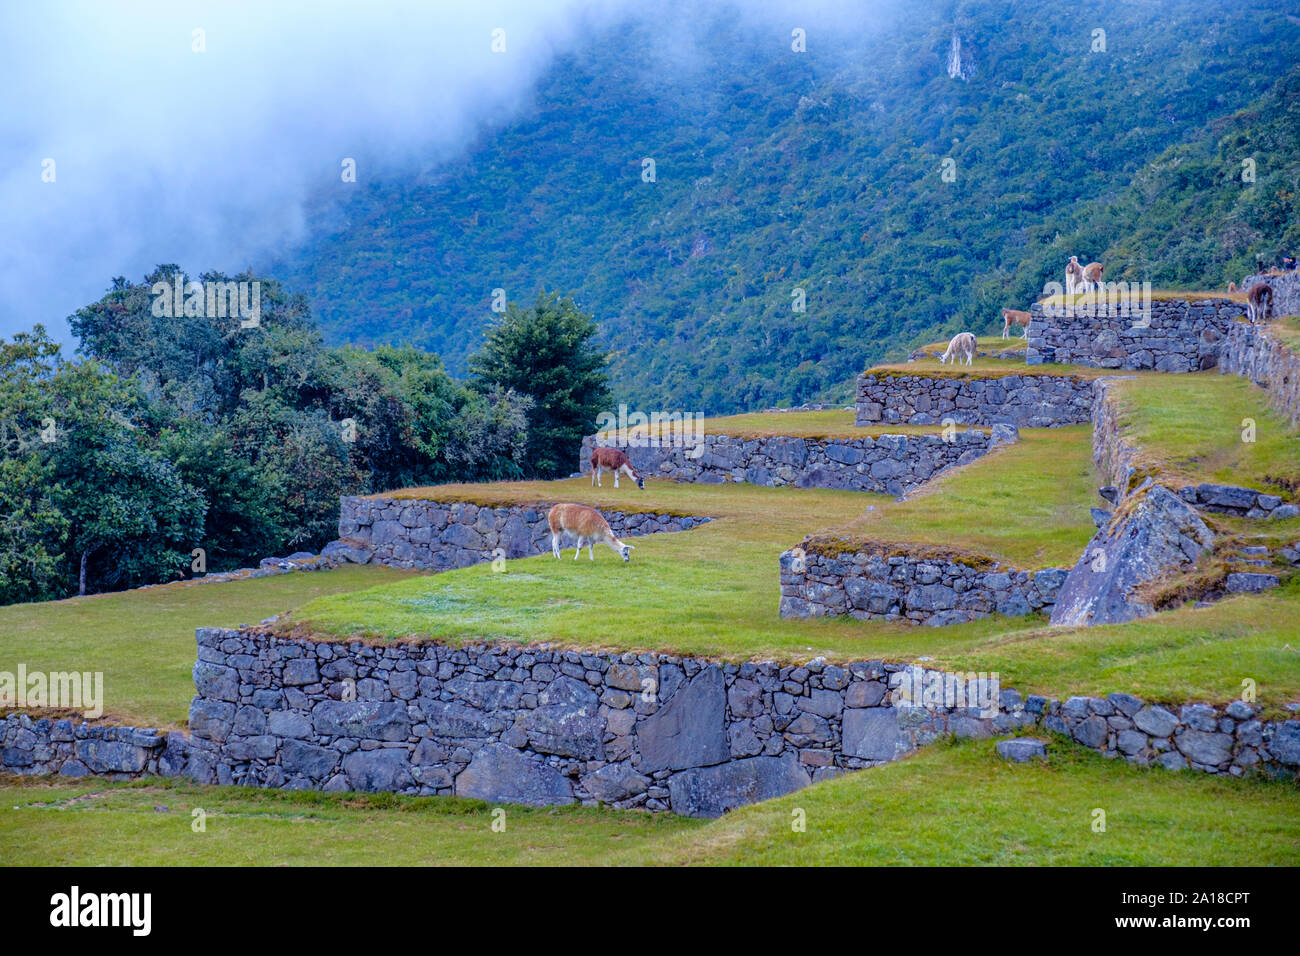 Llamas feeding on grass, farming terraces, early morning, Machu Picchu, Machu Pichu, Sacred Valley of the Incas, Peru. Stock Photo